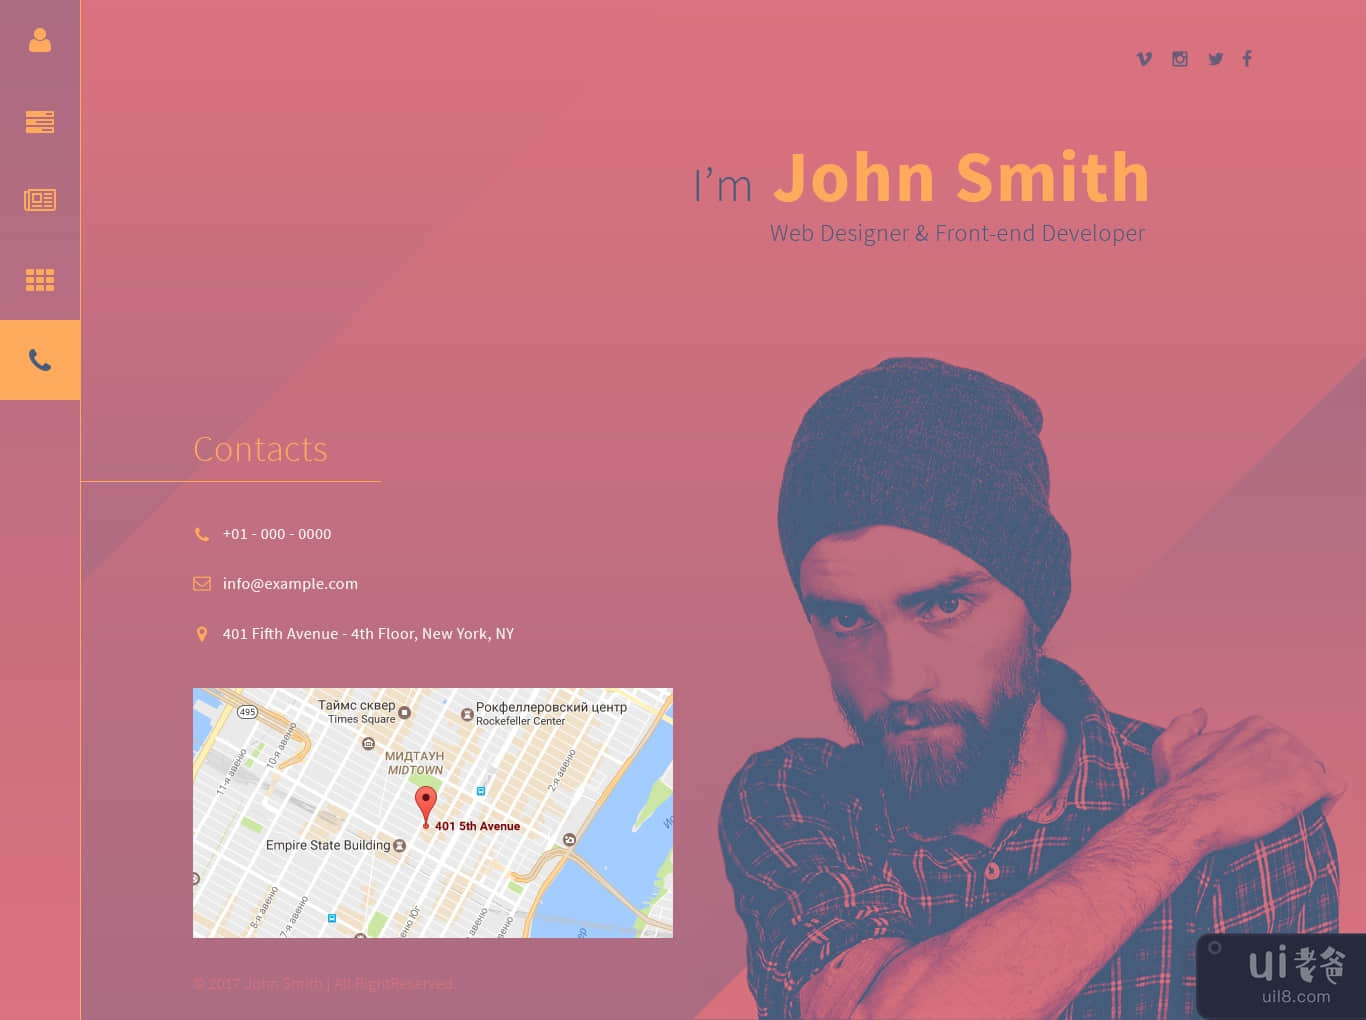 JohnSmith - 设计师作品集网站(JohnSmith - Designer’s Portfolio Website)插图3